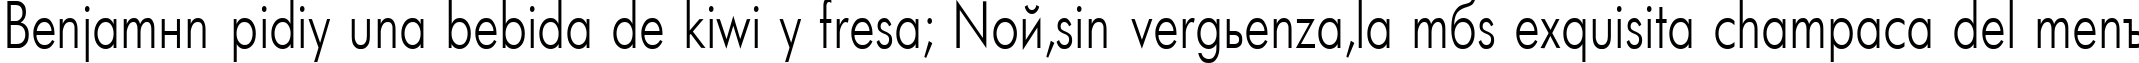 Пример написания шрифтом Futura Narrow текста на испанском